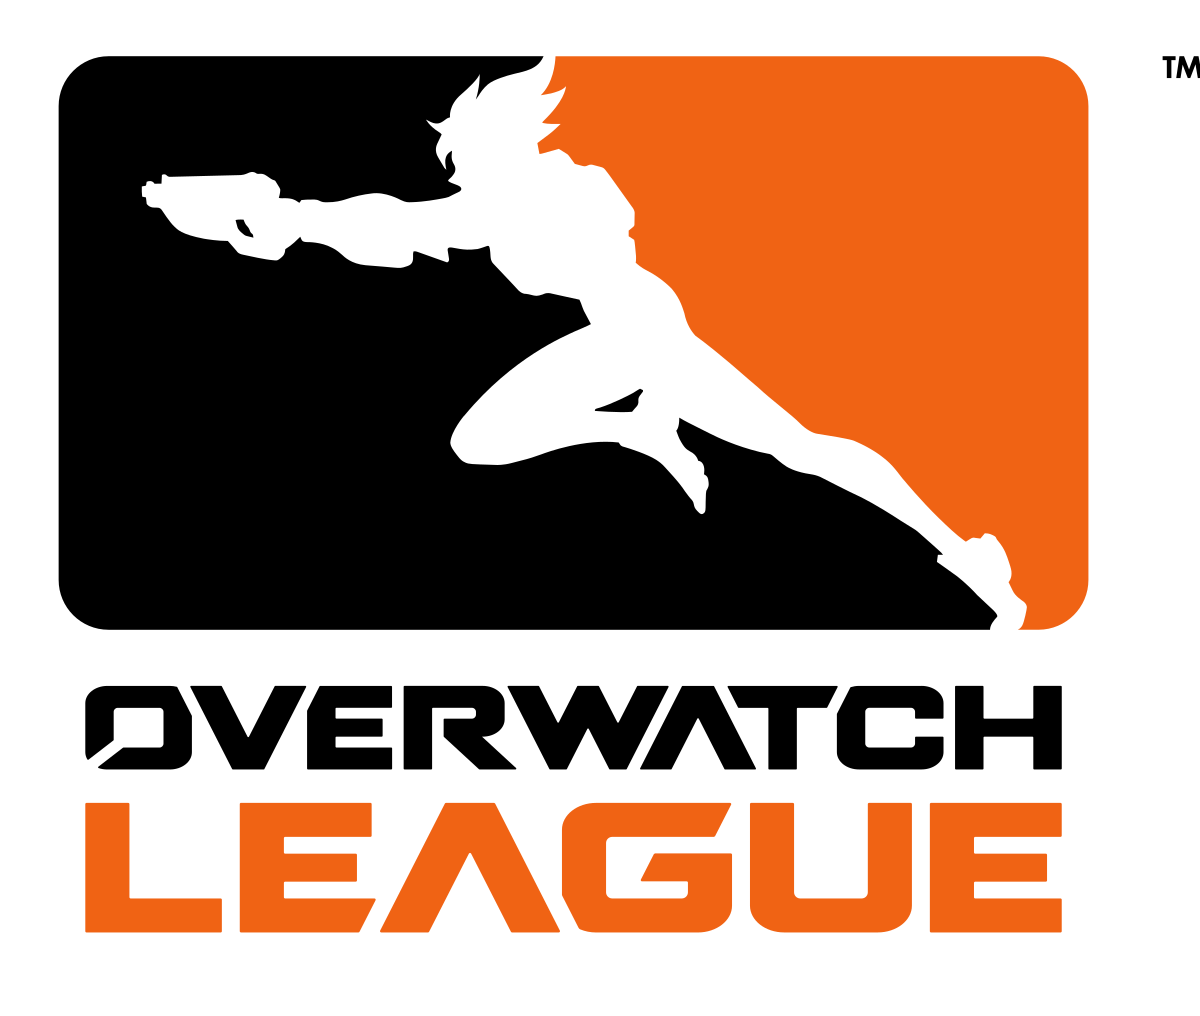 Overwatch League - Wikipedia